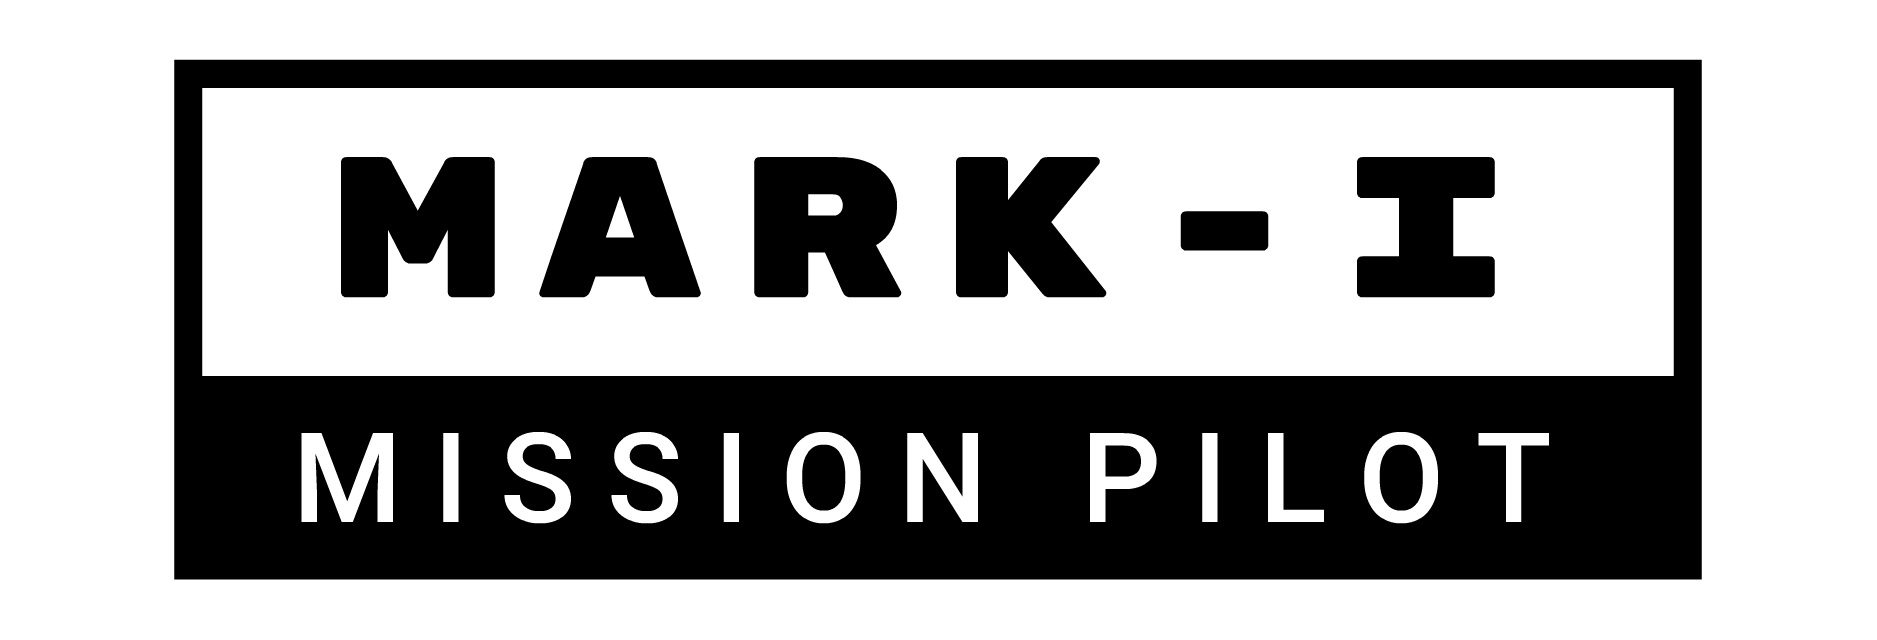 MARK-I: Mission Pilot